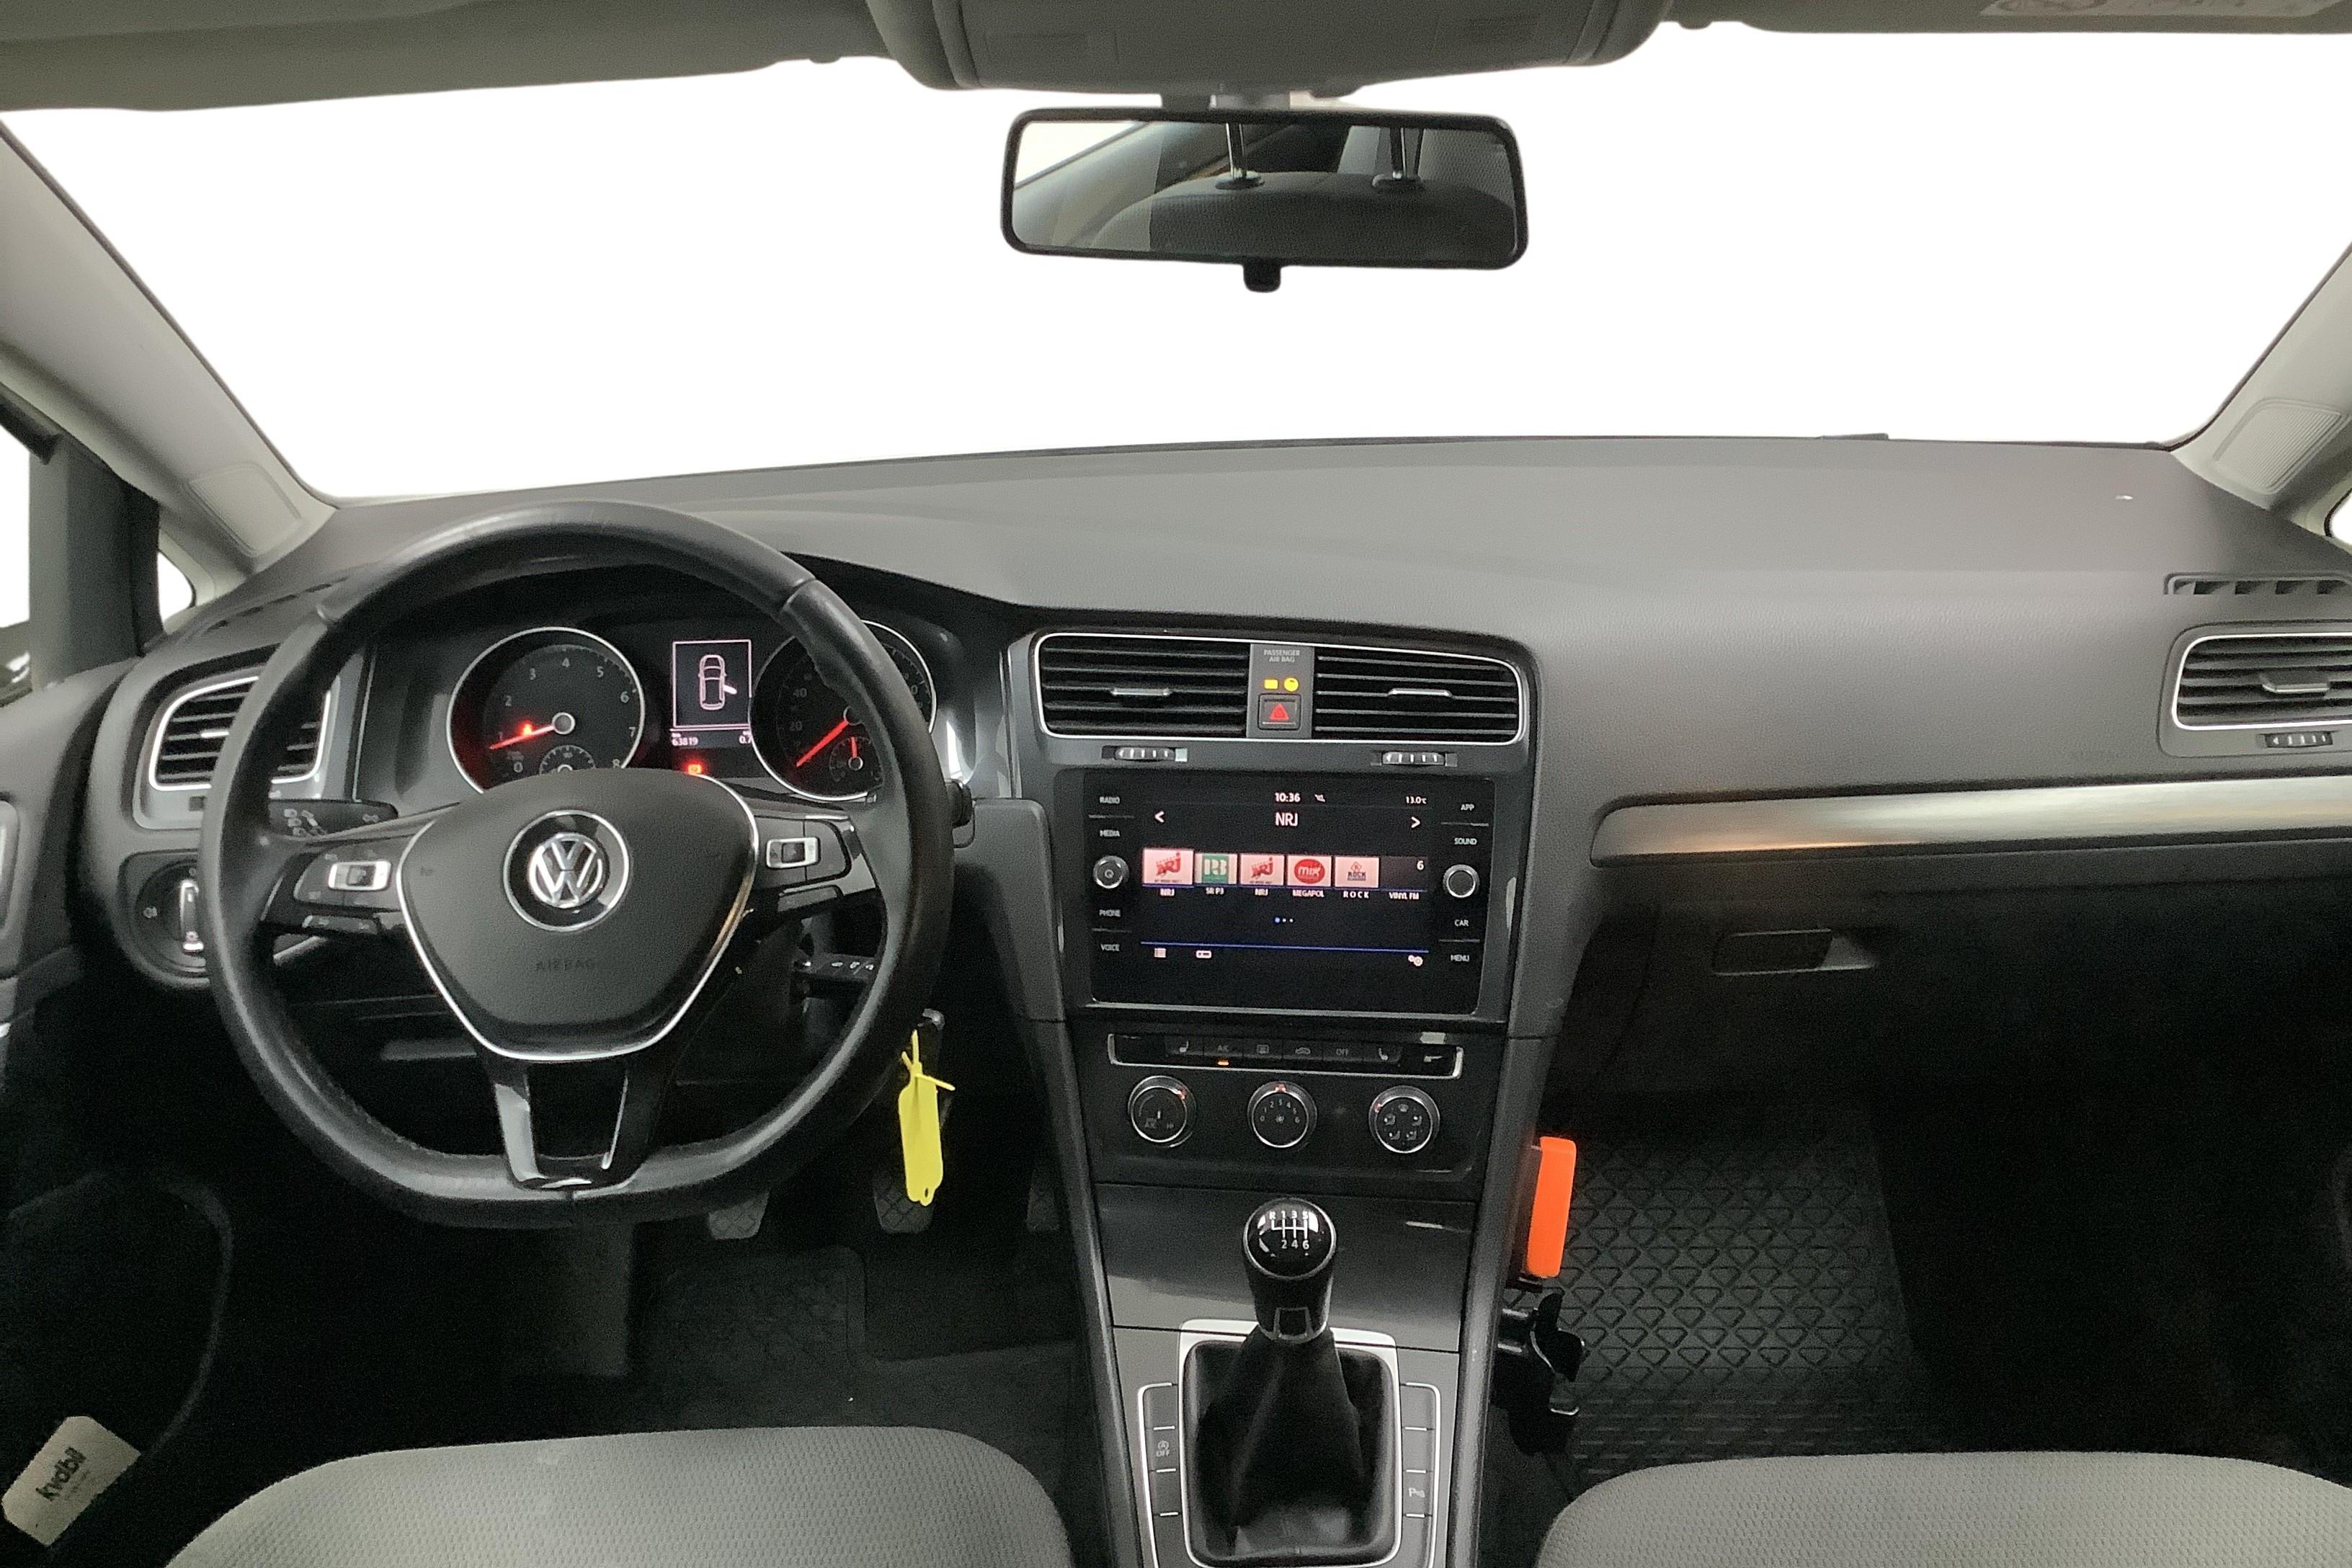 VW Golf VII 1.4 TSI Multifuel 5dr (125hk) - 6 382 mil - Manuell - vit - 2018